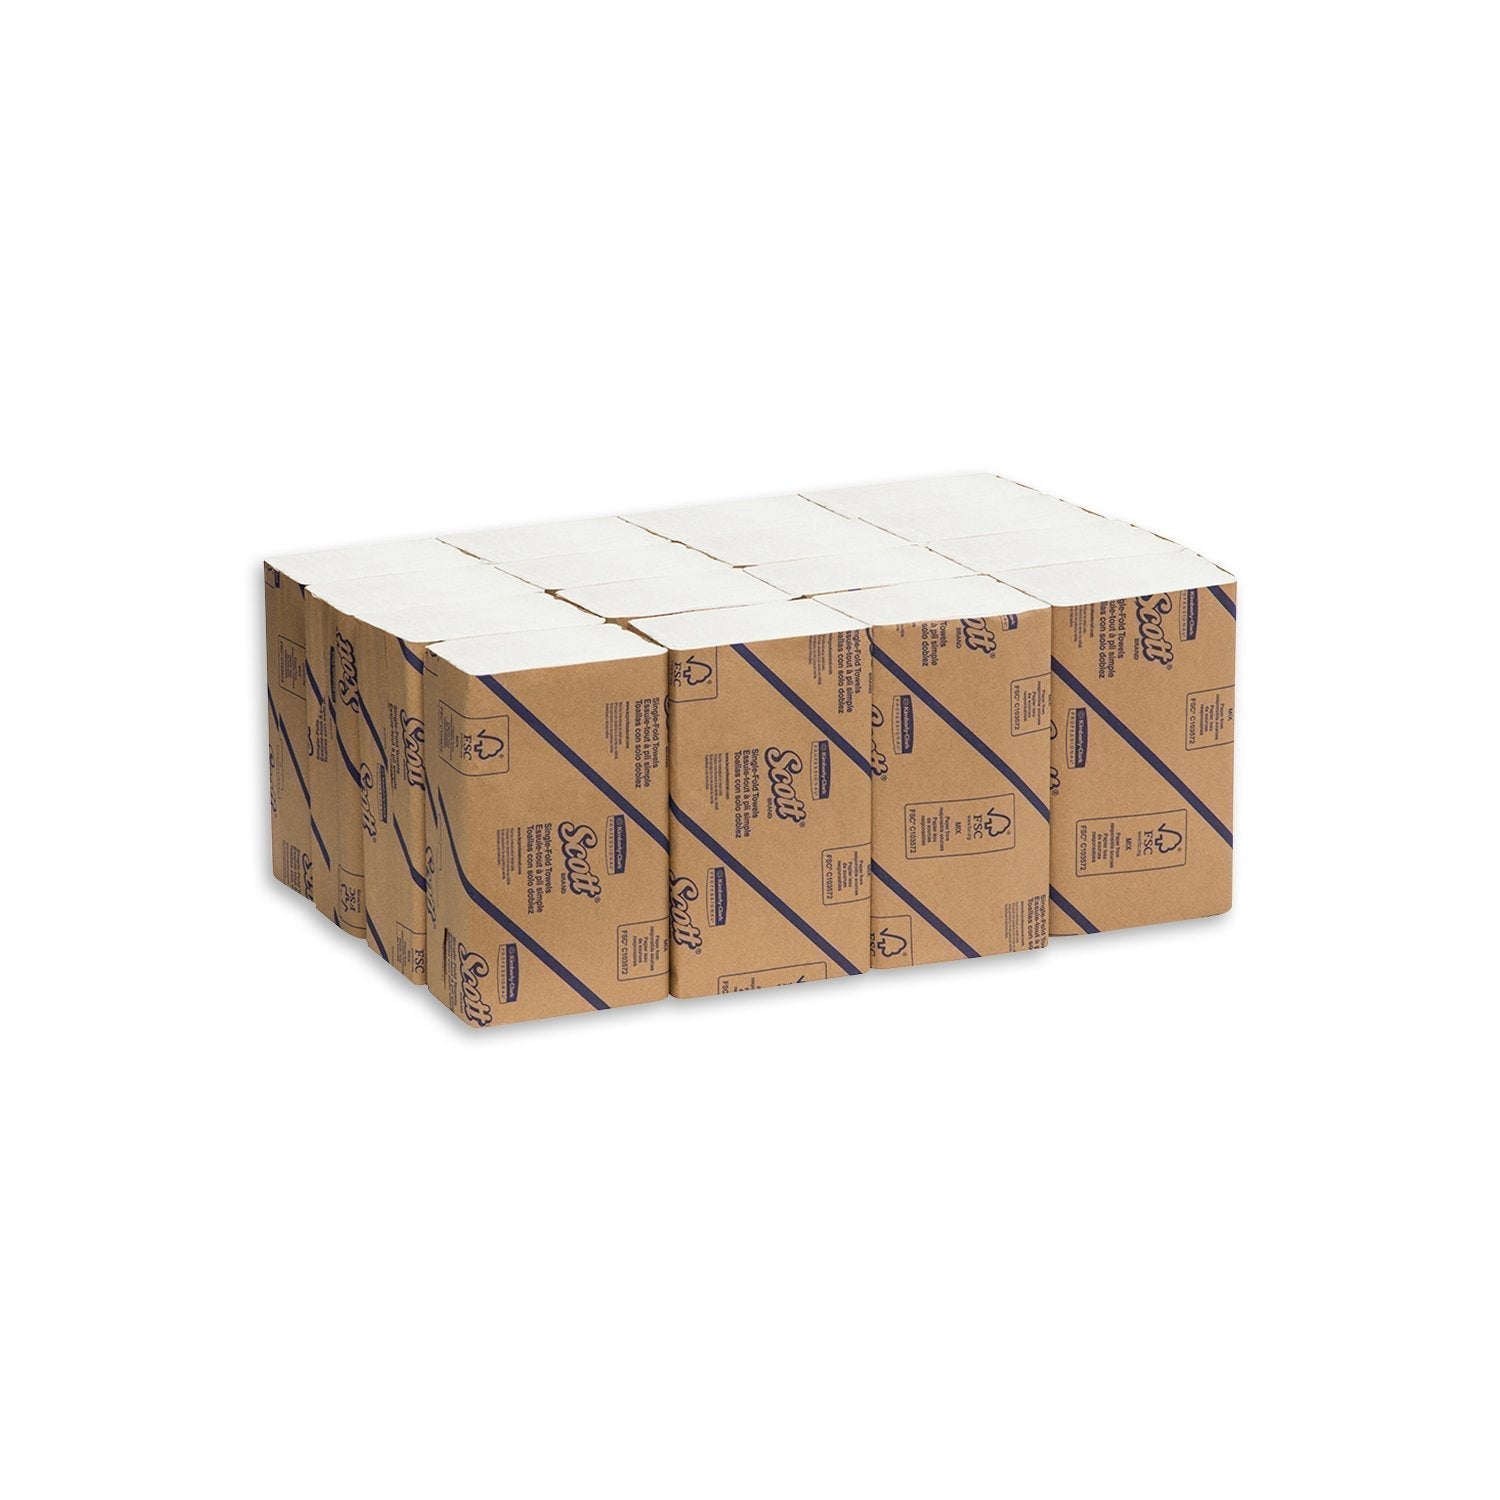 Kimberly-Clark Scott Towel interfold 26.6x23.6cm 250 sheets - CT/16 Bathroom Supplies Carton of 16 